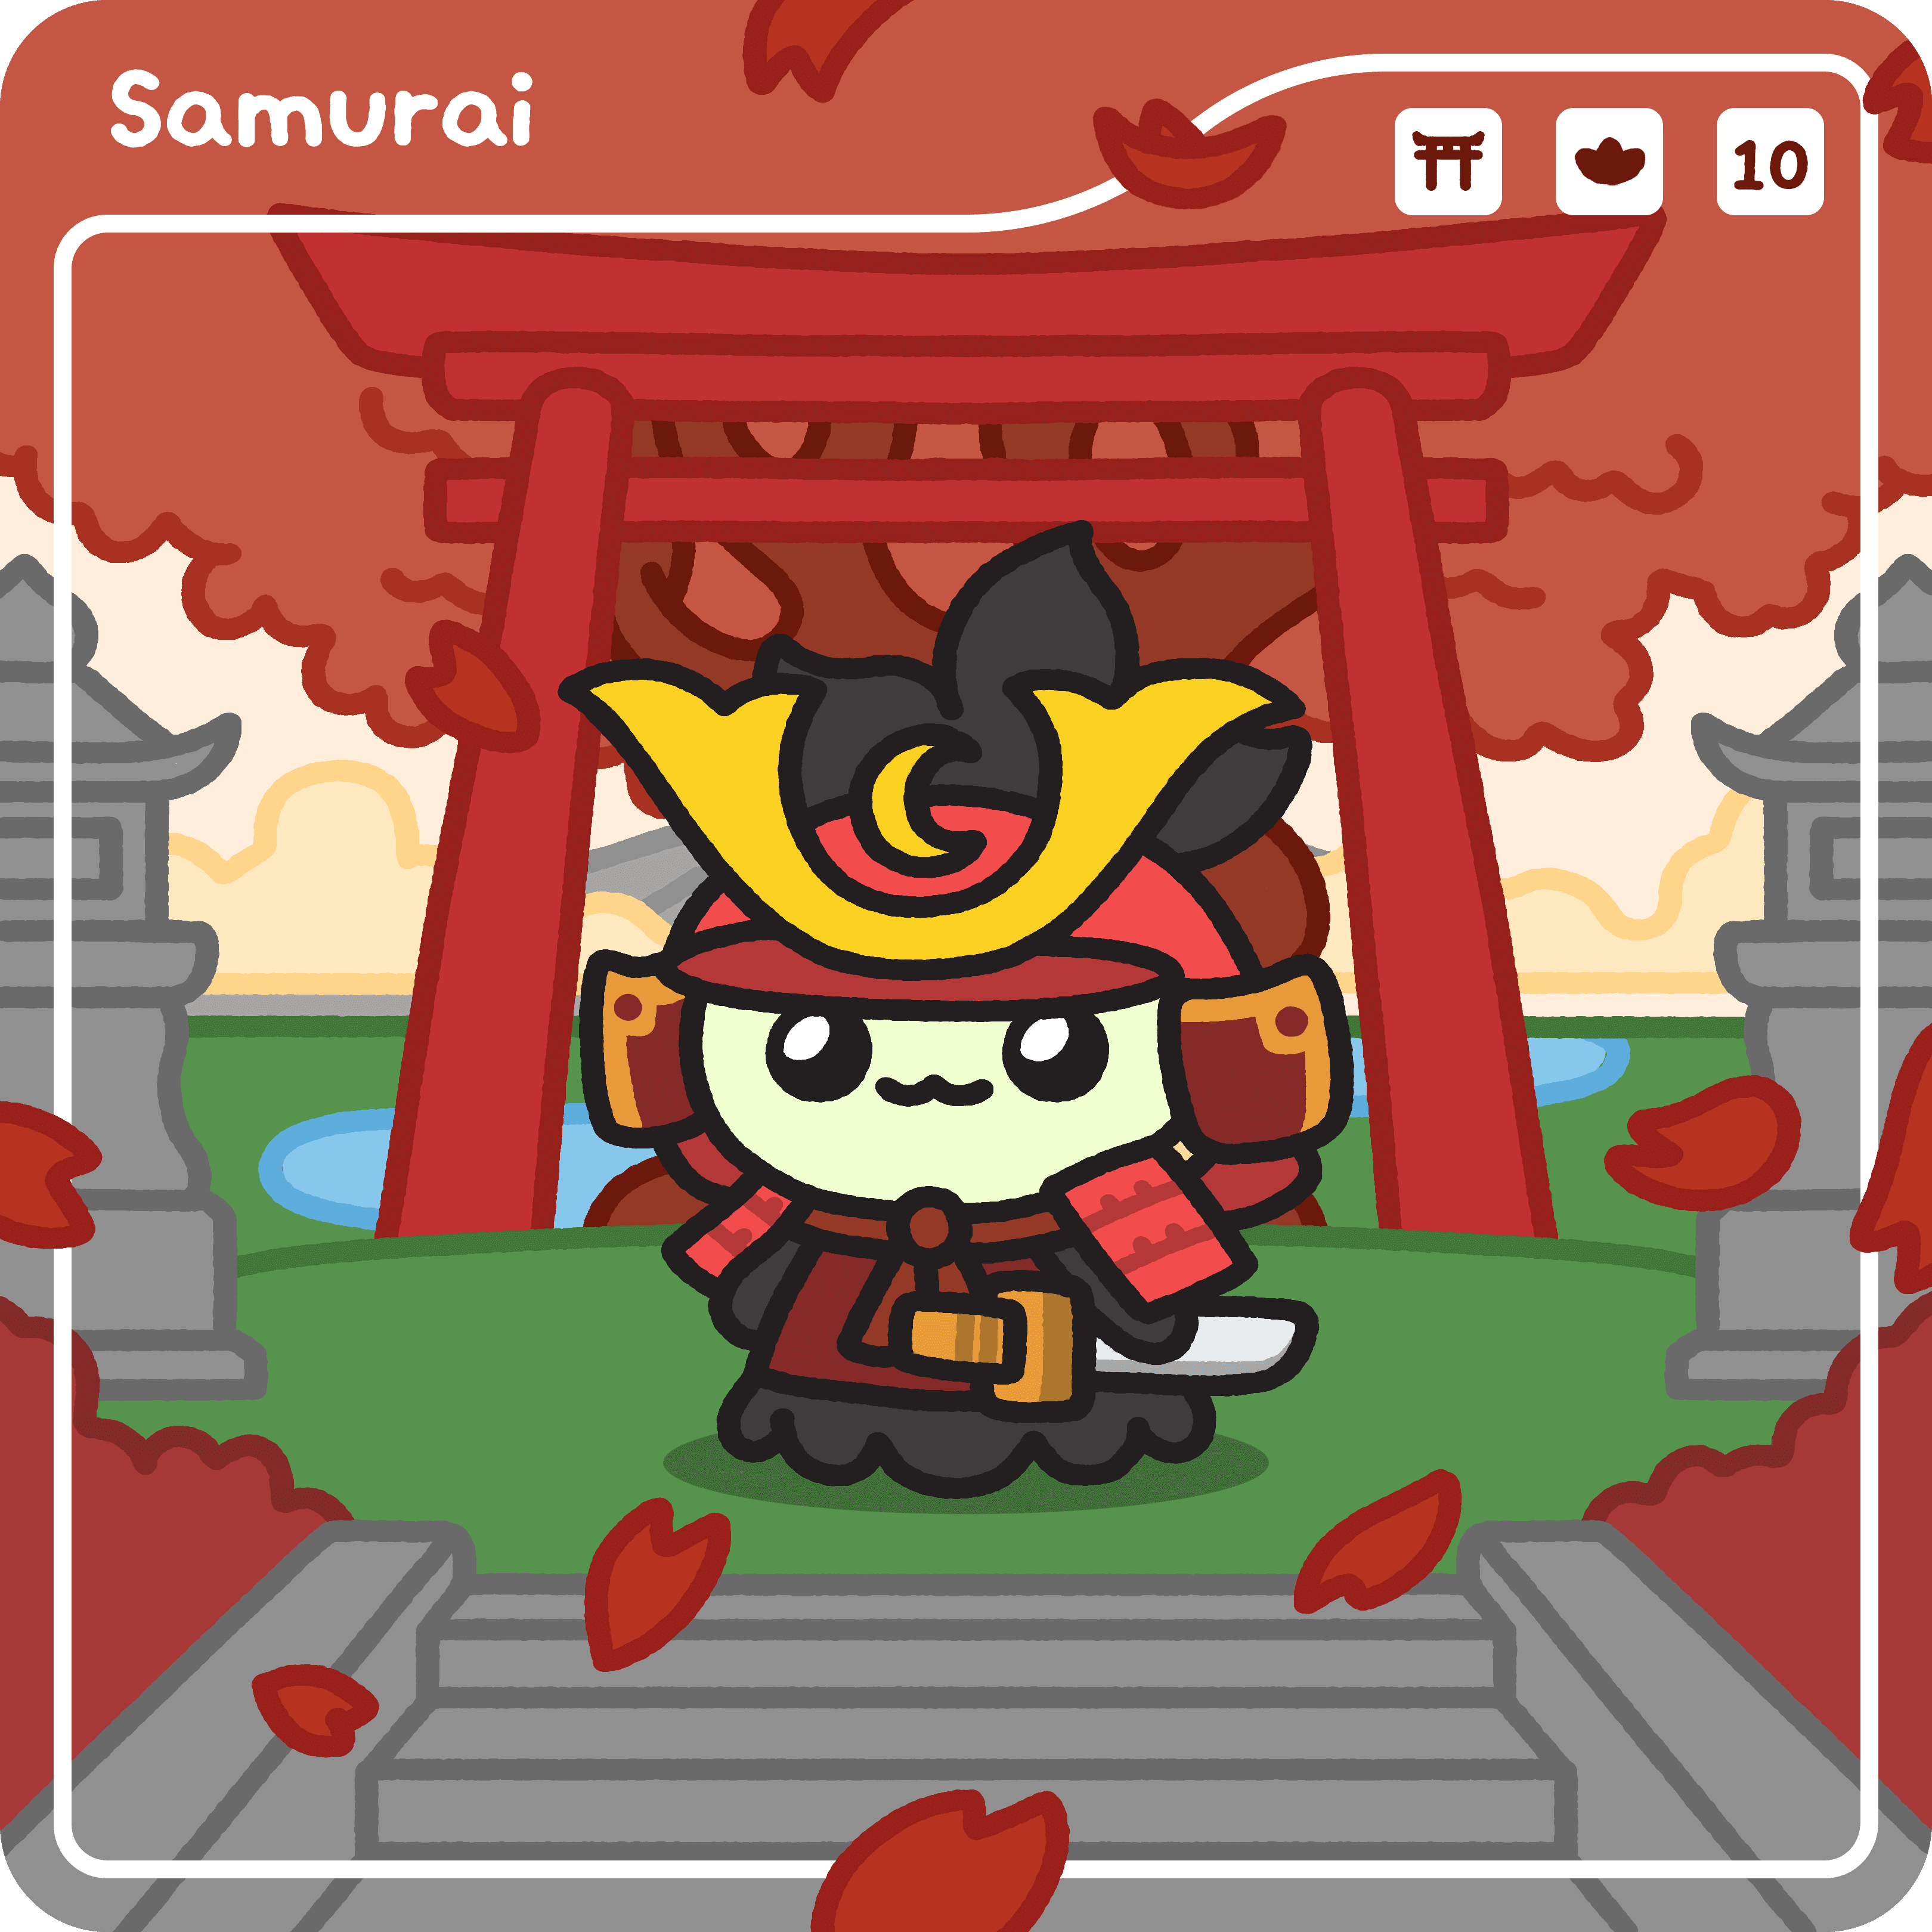 Samurai Sage #10